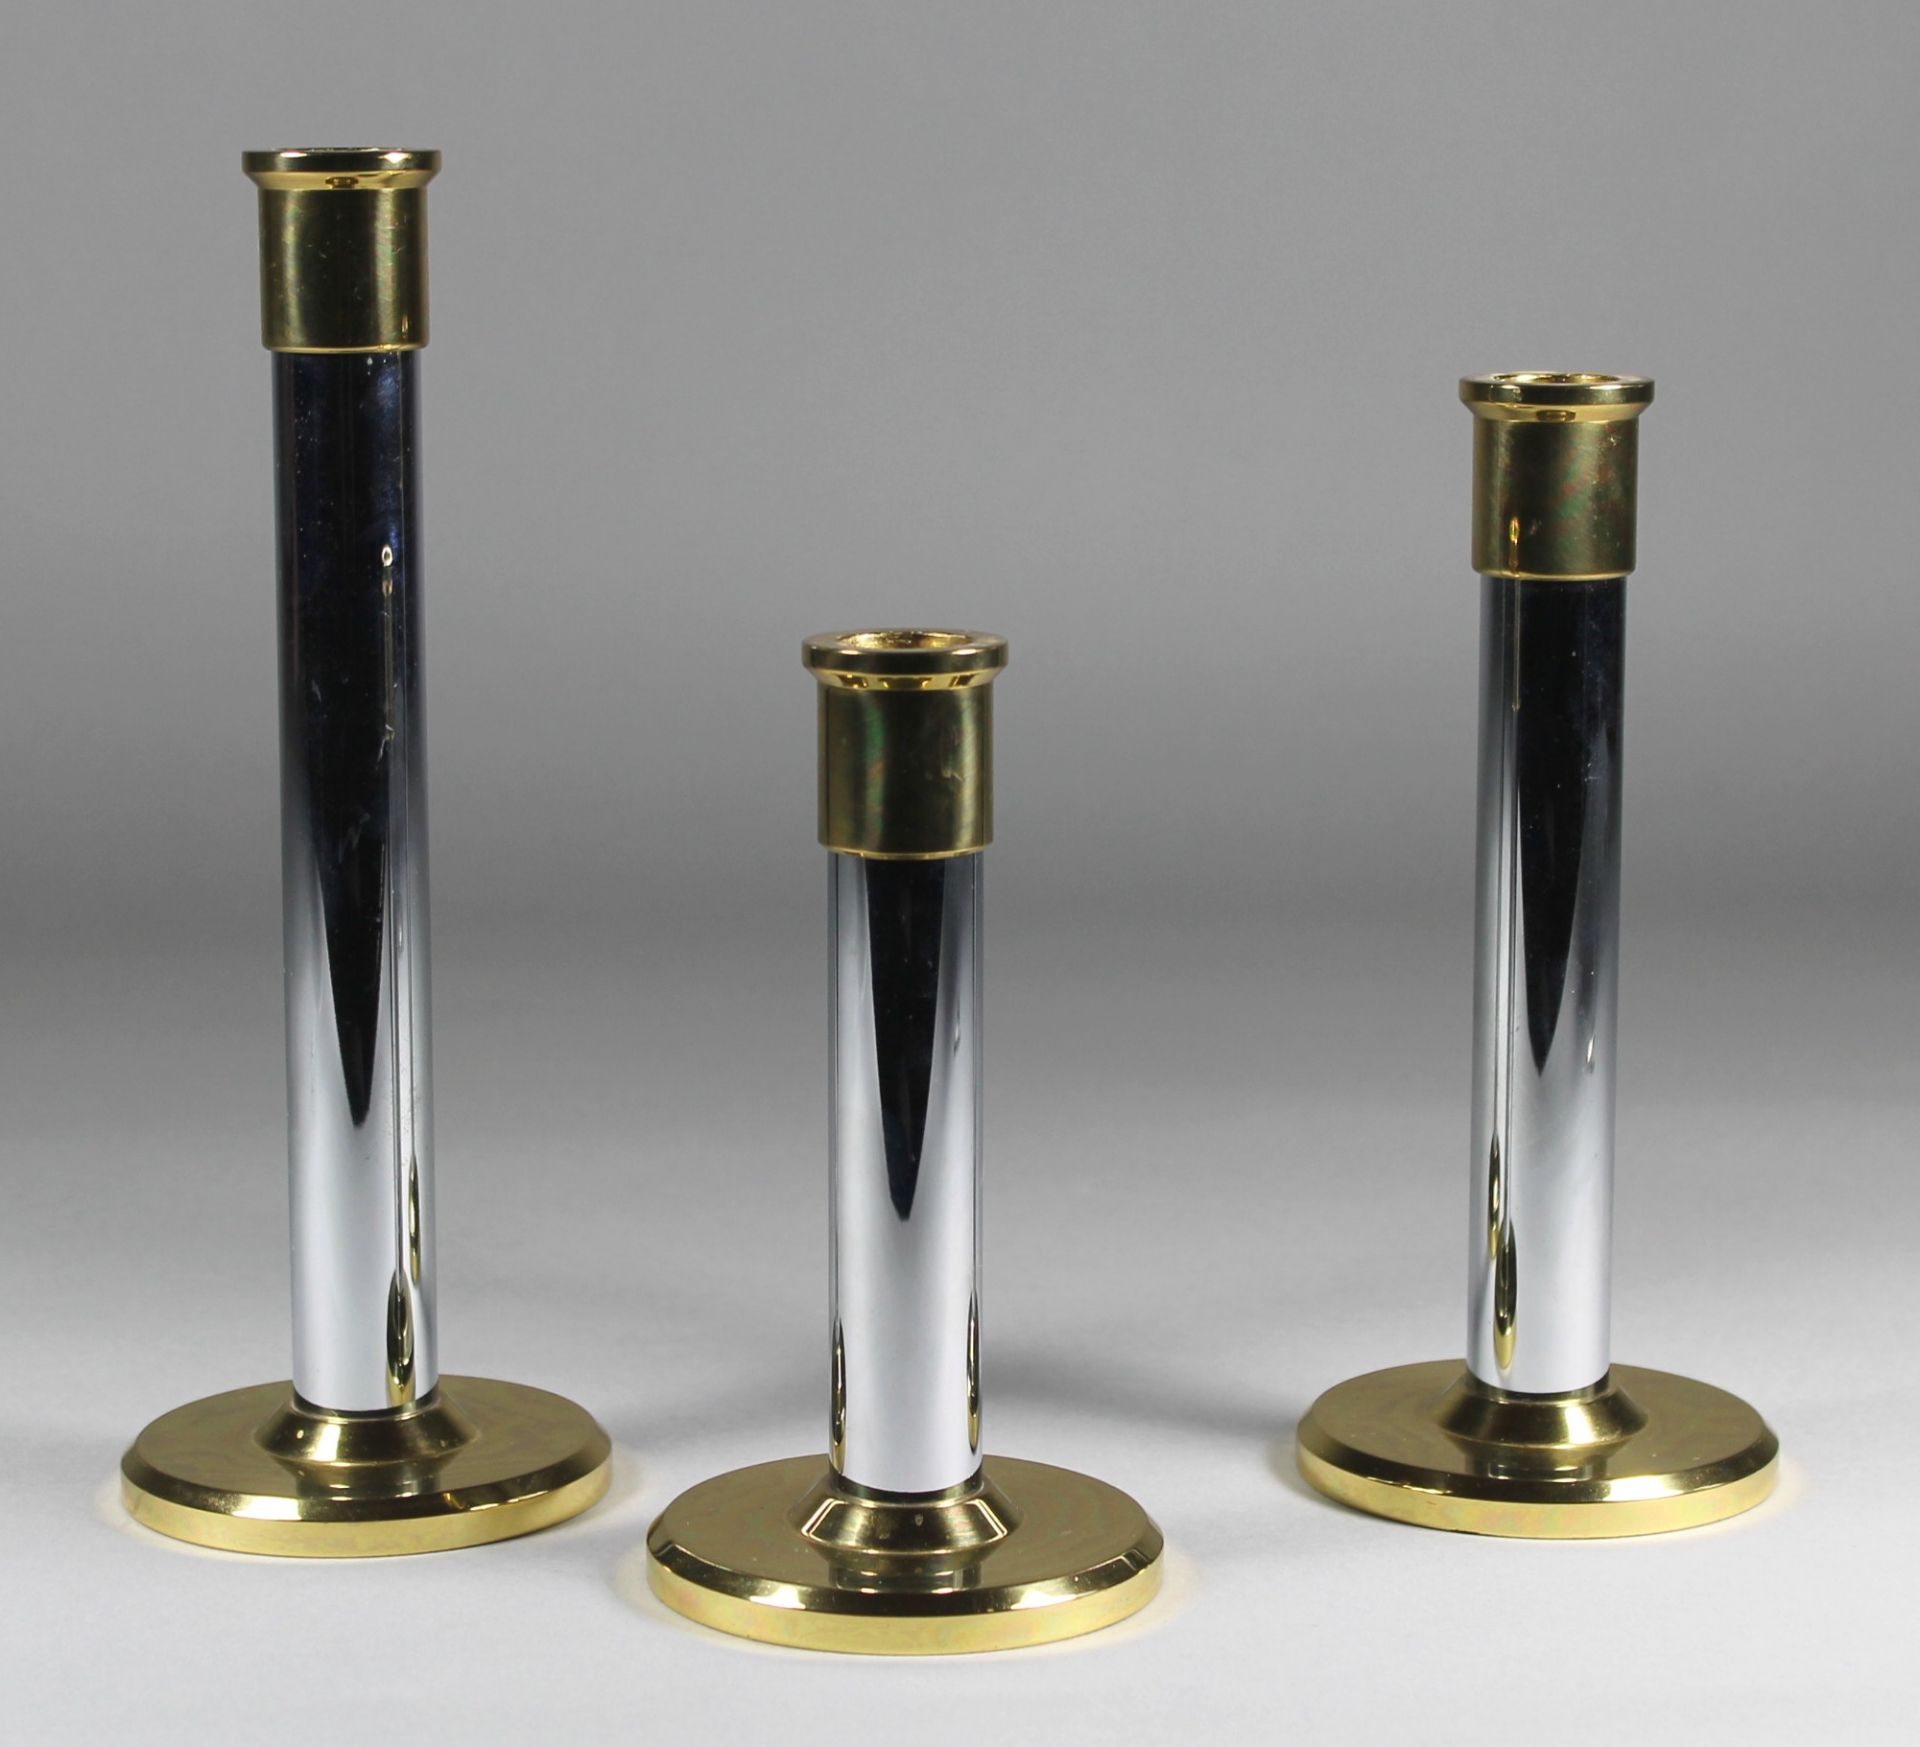 1 Kerzenhalterset bestehend aus 3 verschieden hohen Kerzenhaltern Messing/Metall